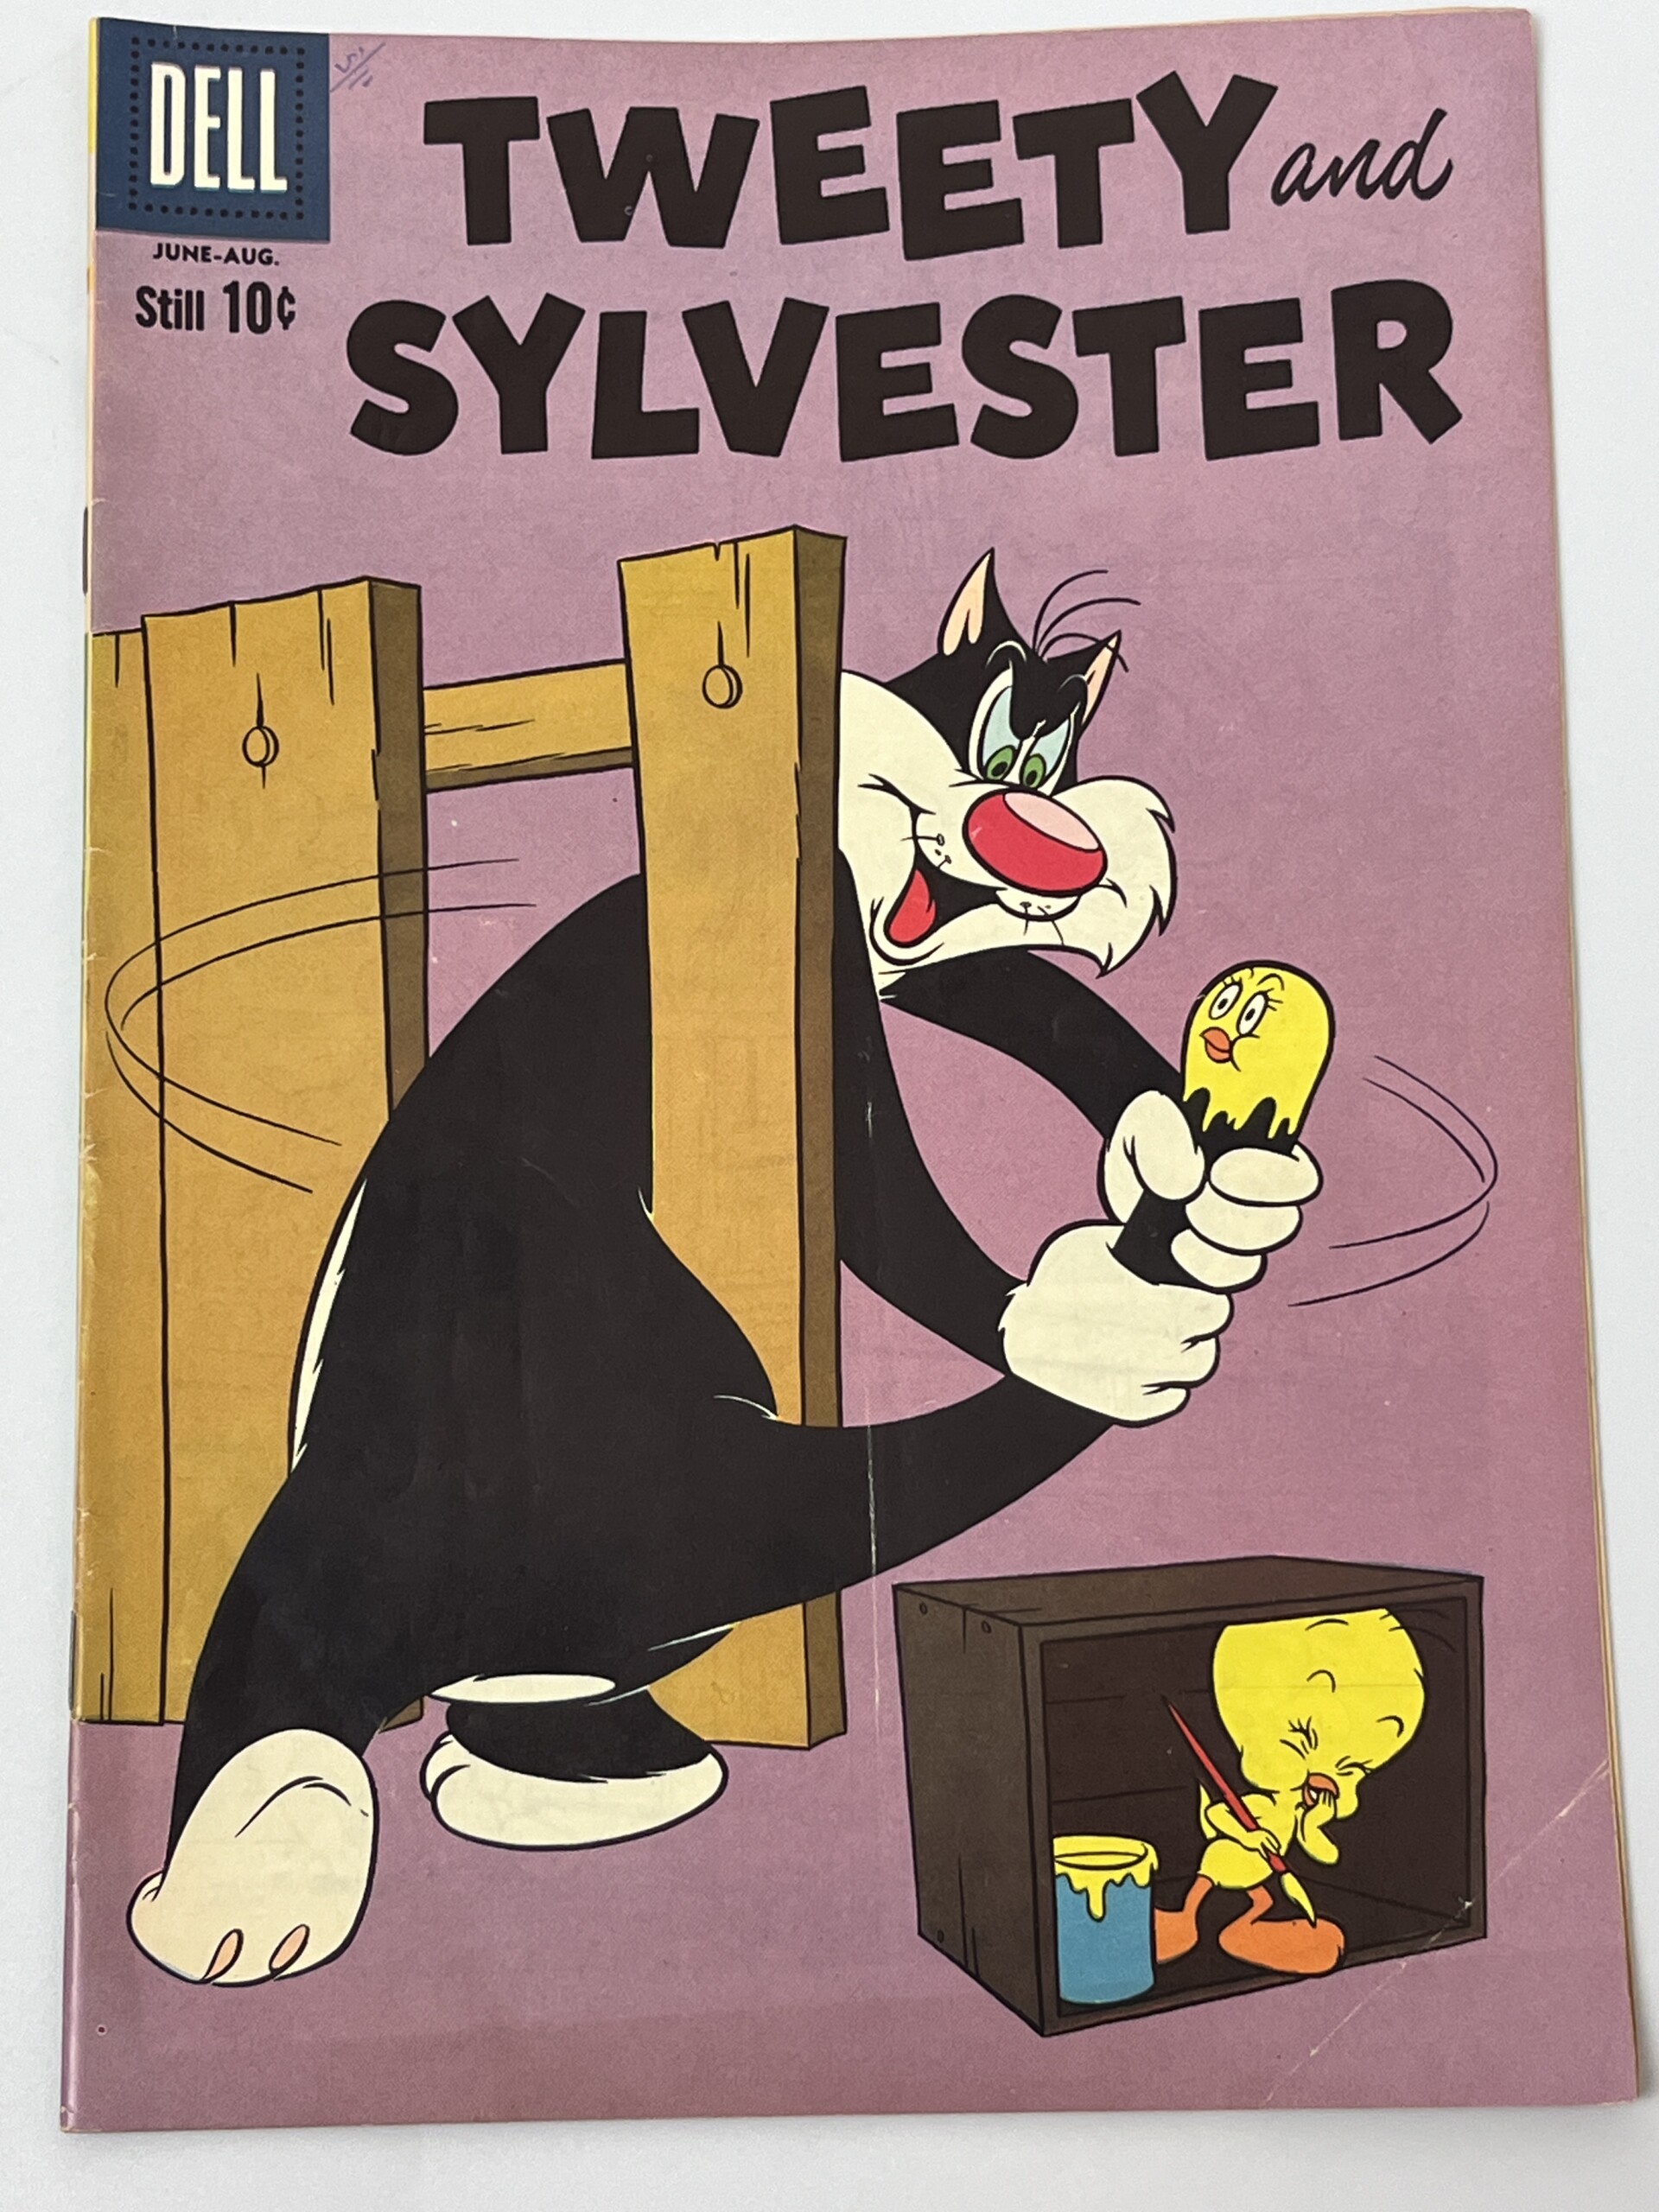 Tweety & Sylvester #29 (1960) in 5.0 Very Good/Fine